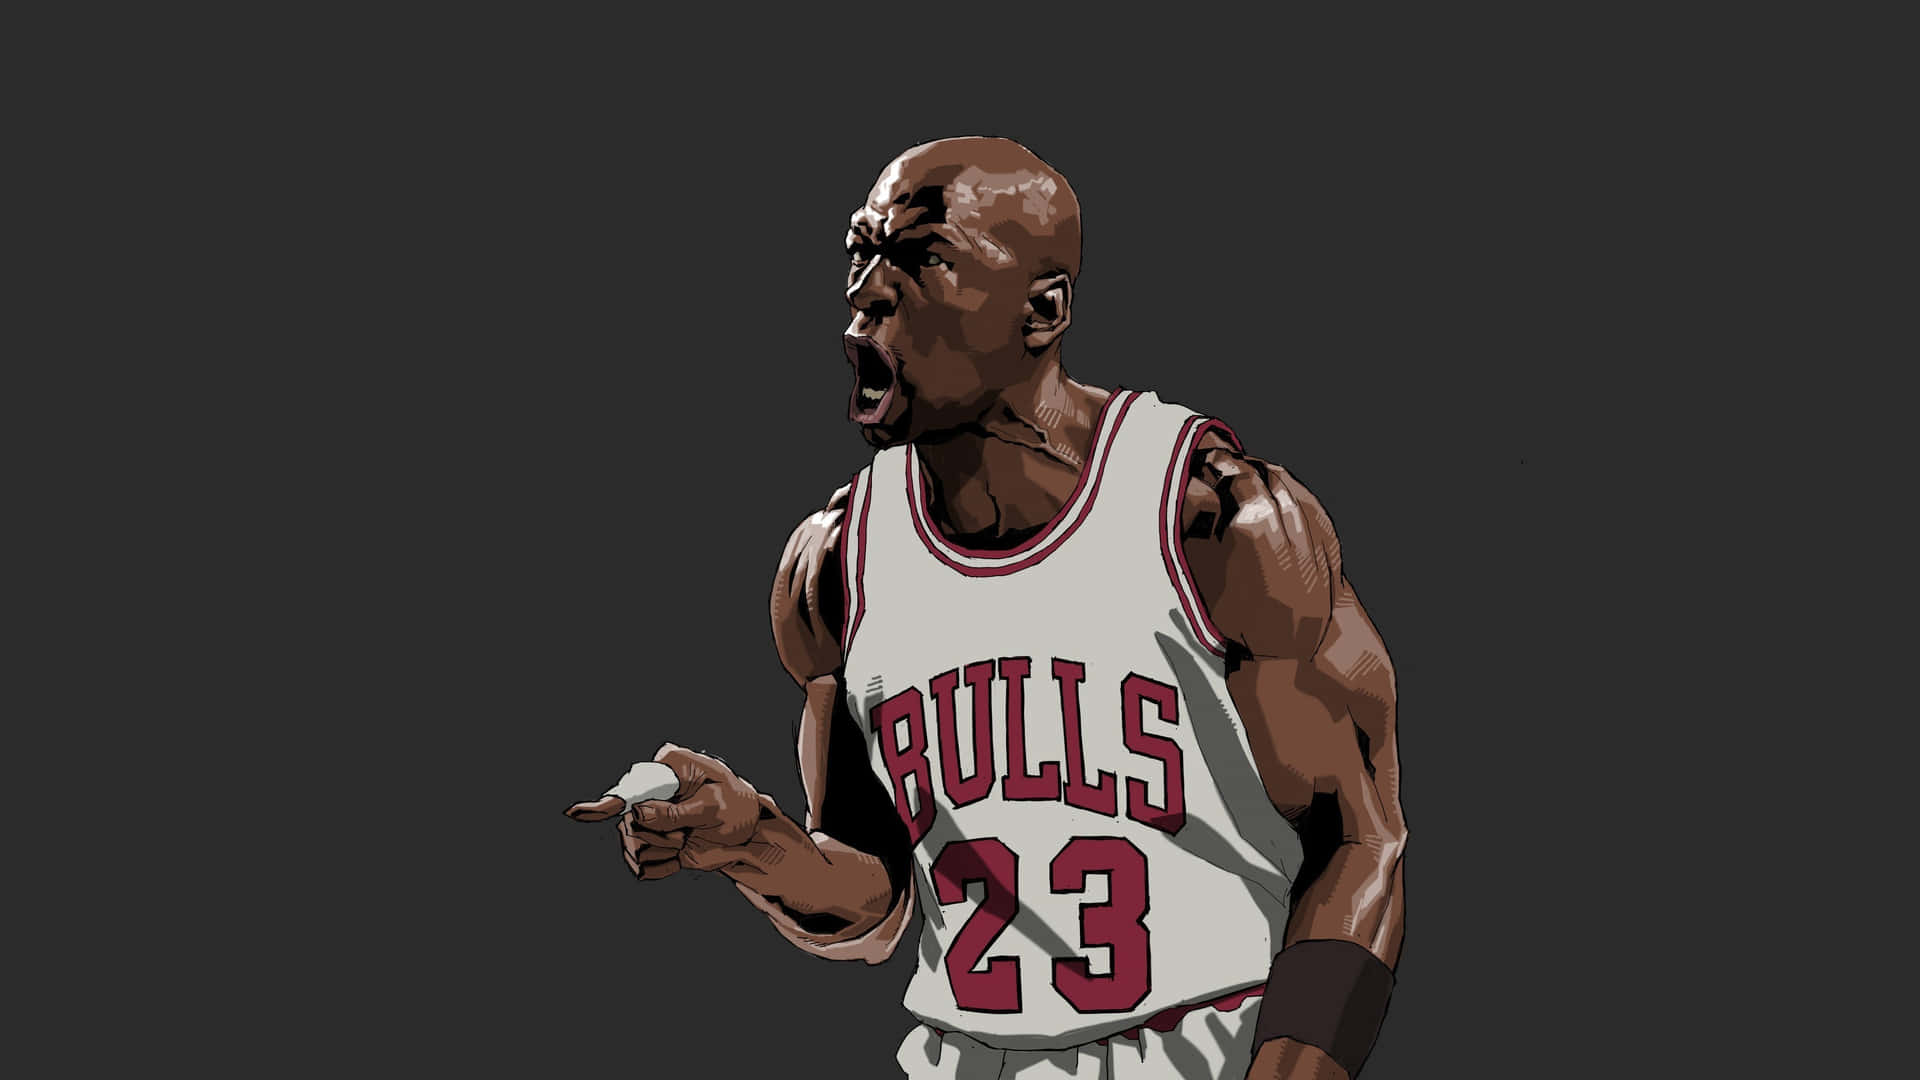 Intense Basketball Player Illustration Wallpaper